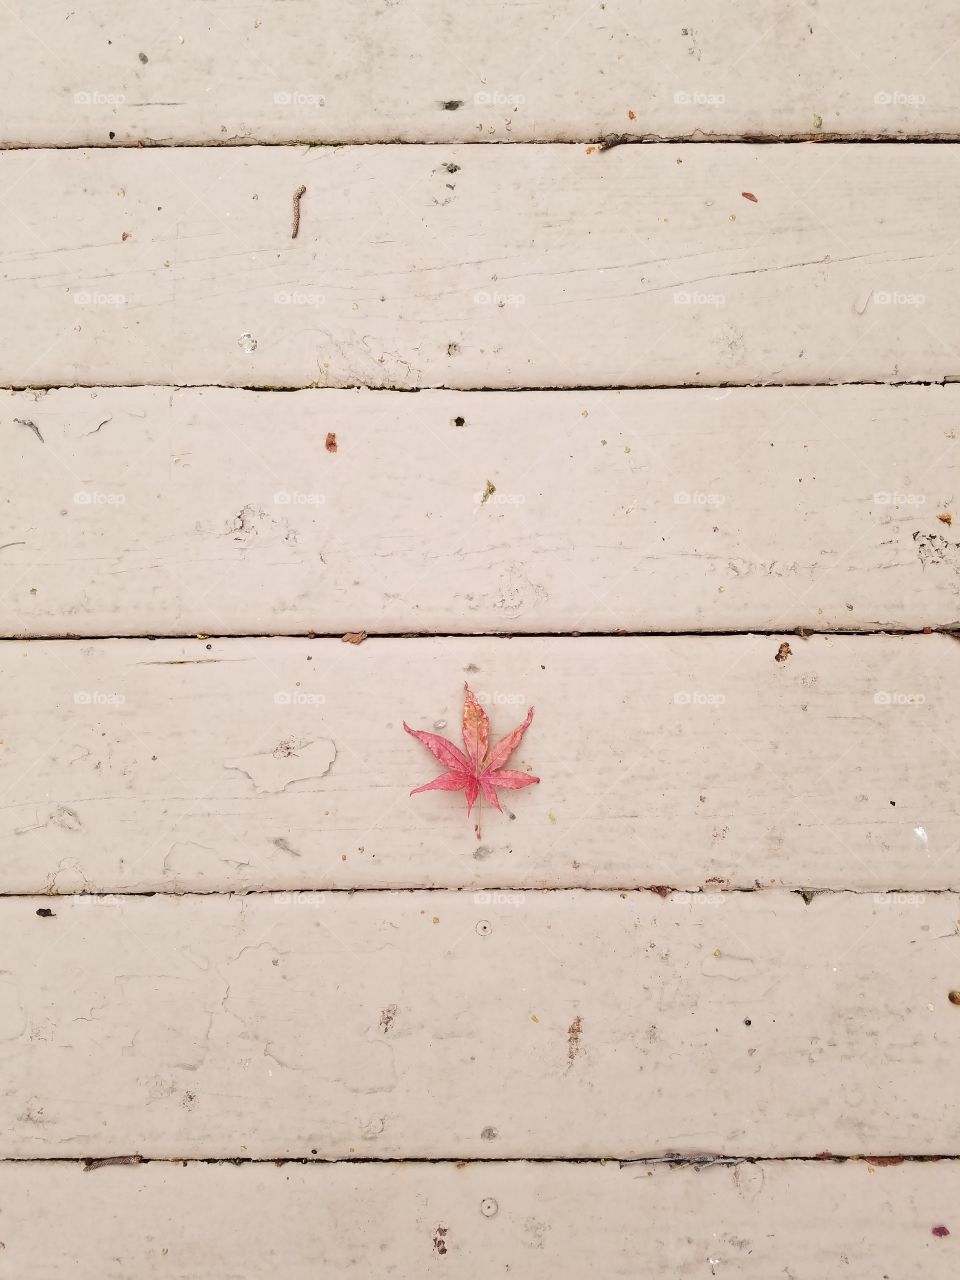 Leaf on the walkway